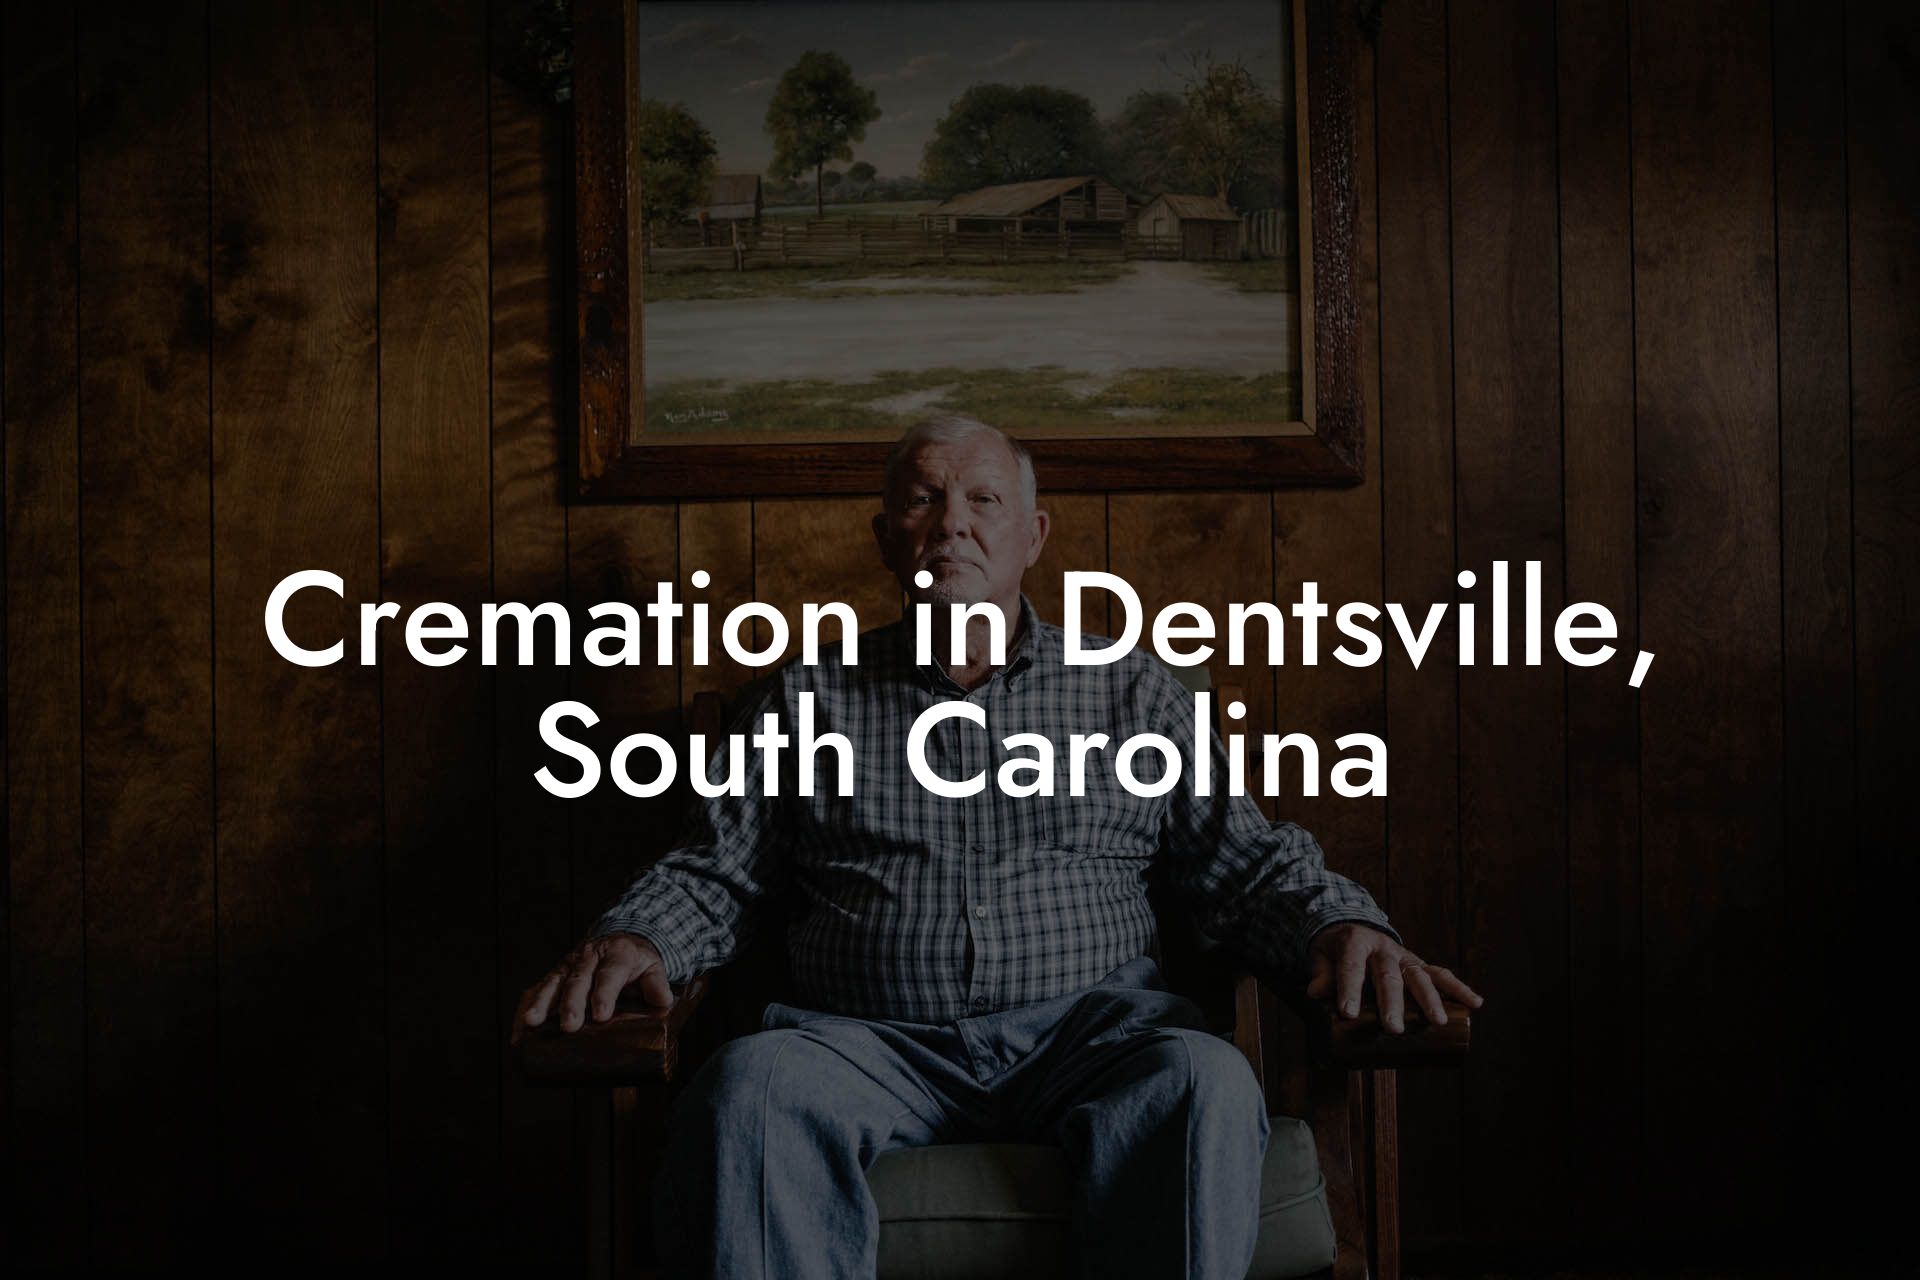 Cremation in Dentsville, South Carolina